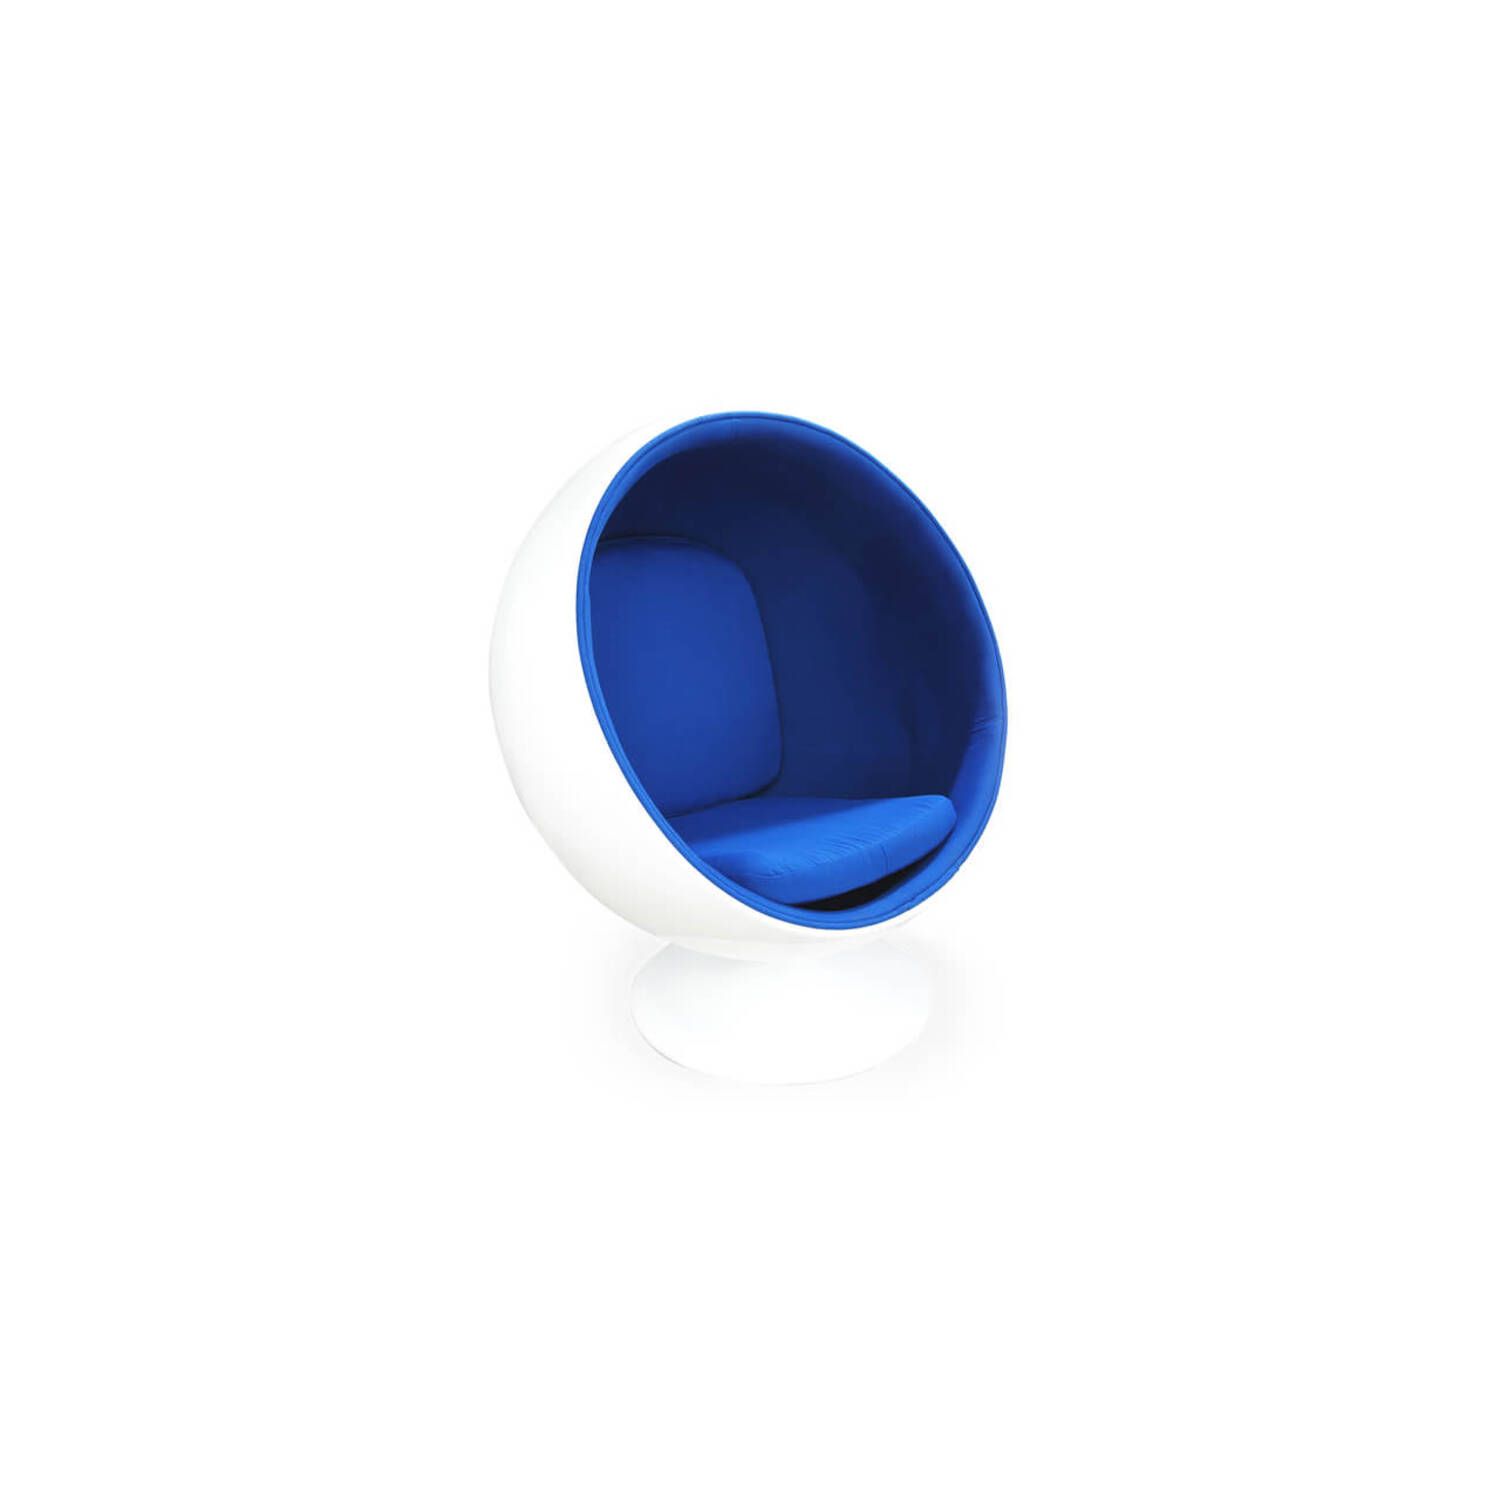 Кресло-шар Ball Chair бело-синее